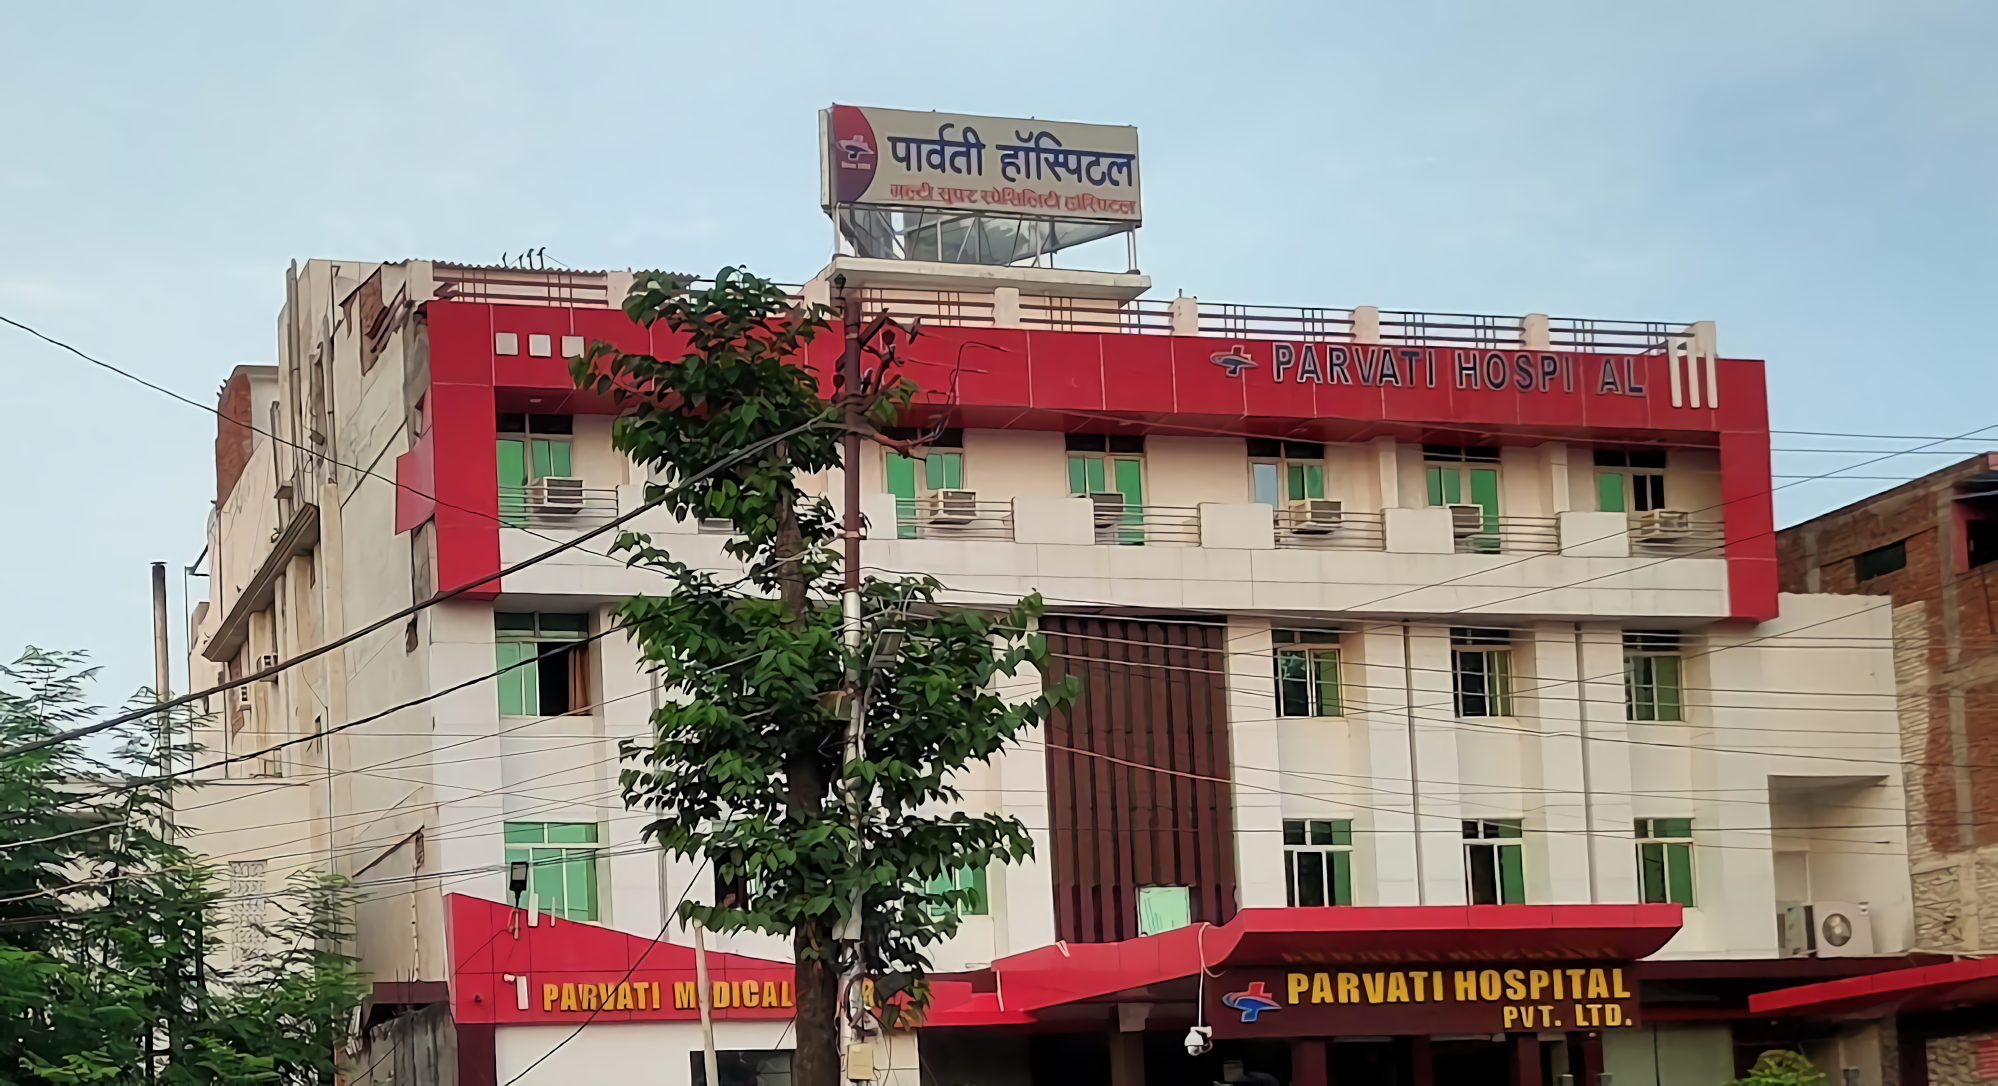 Parvati Hospital Pvt Ltd